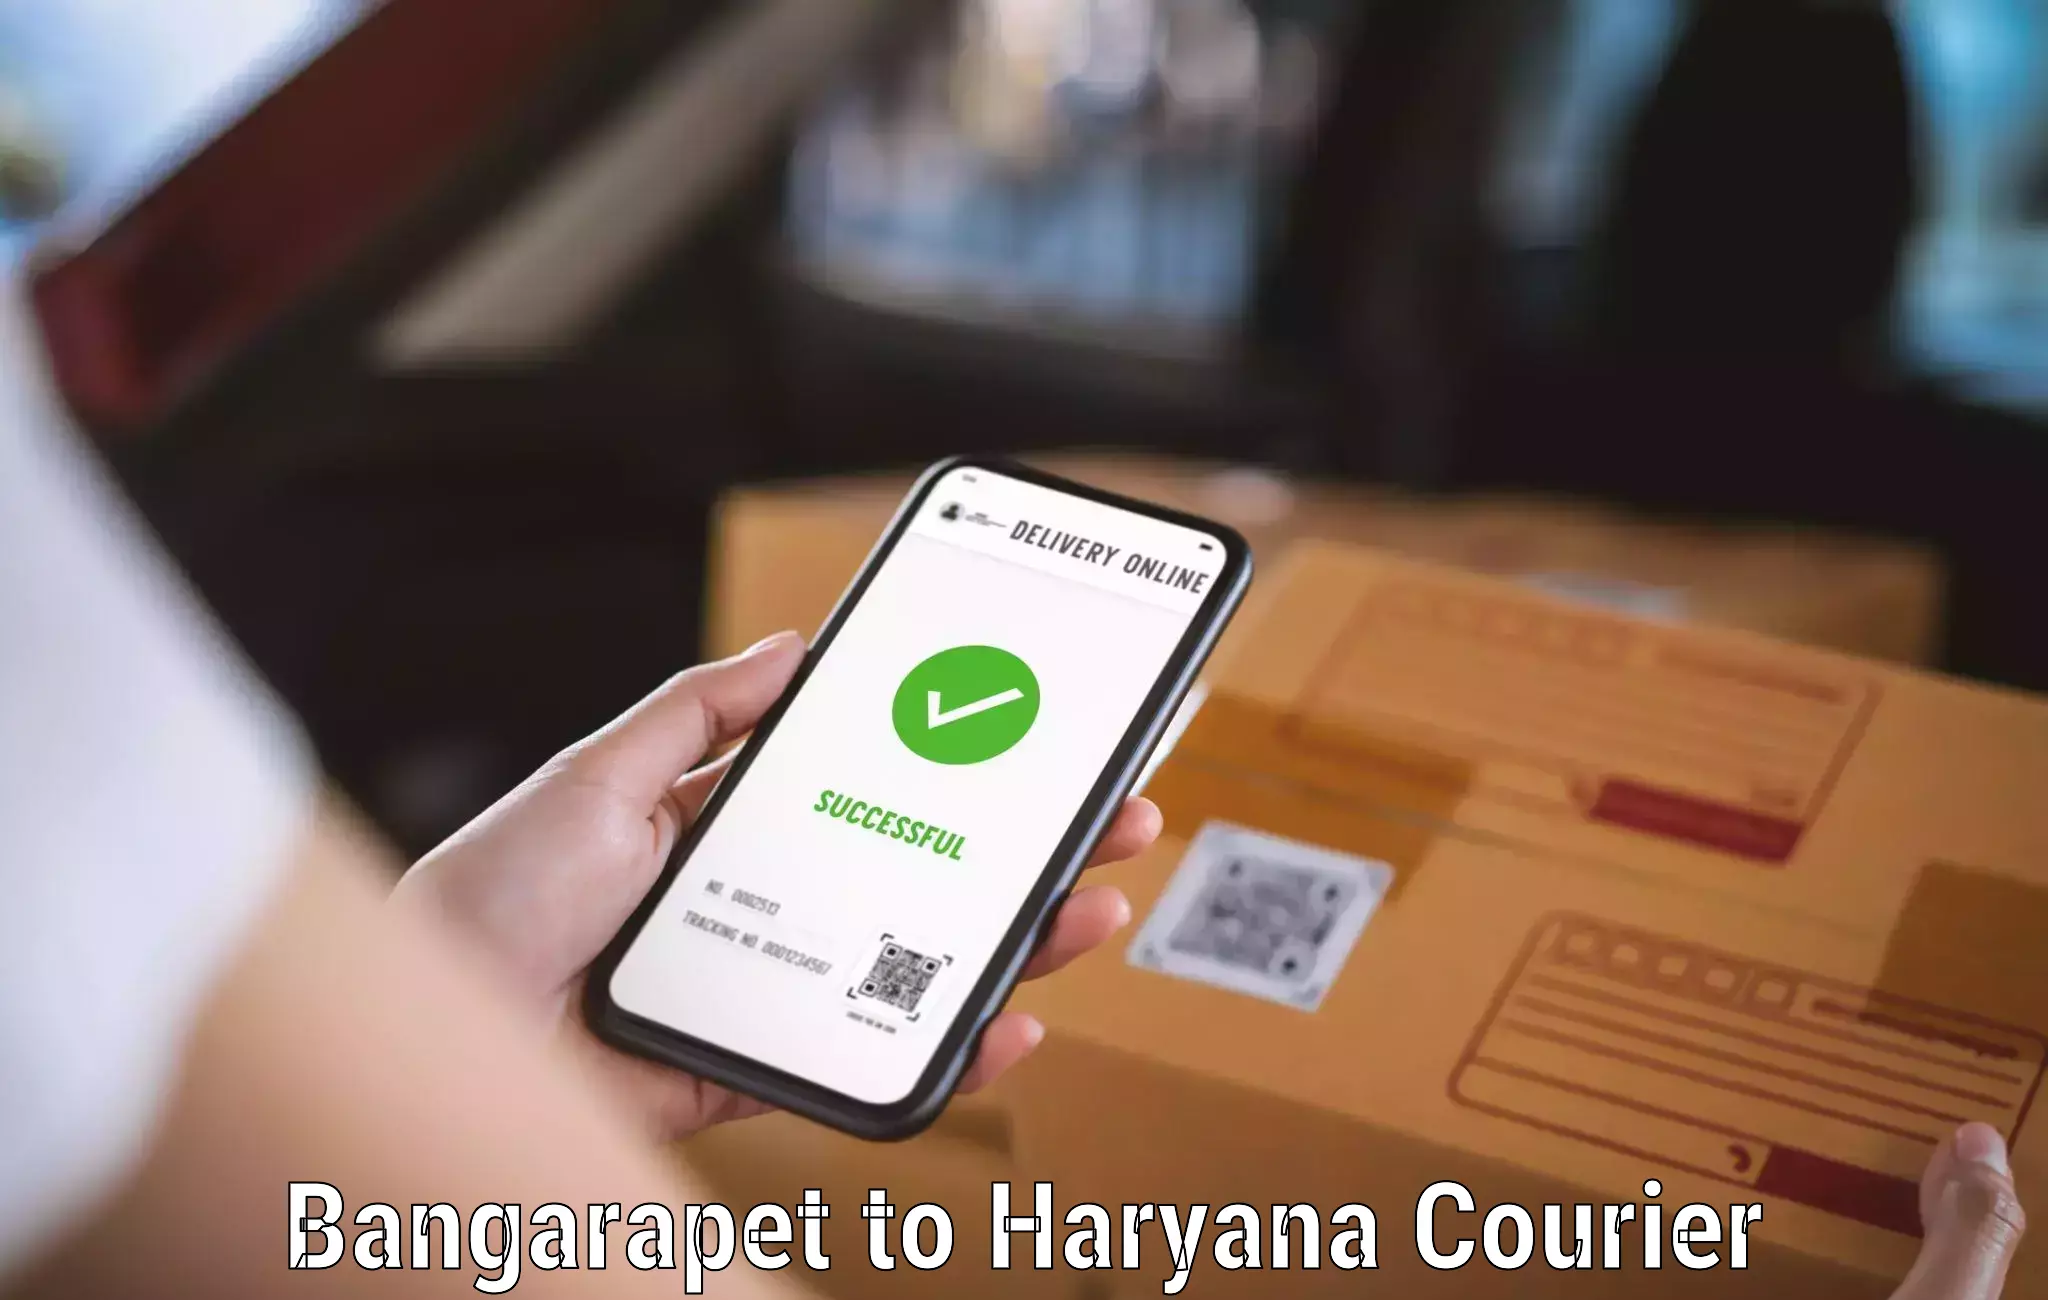 User-friendly courier app Bangarapet to Haryana